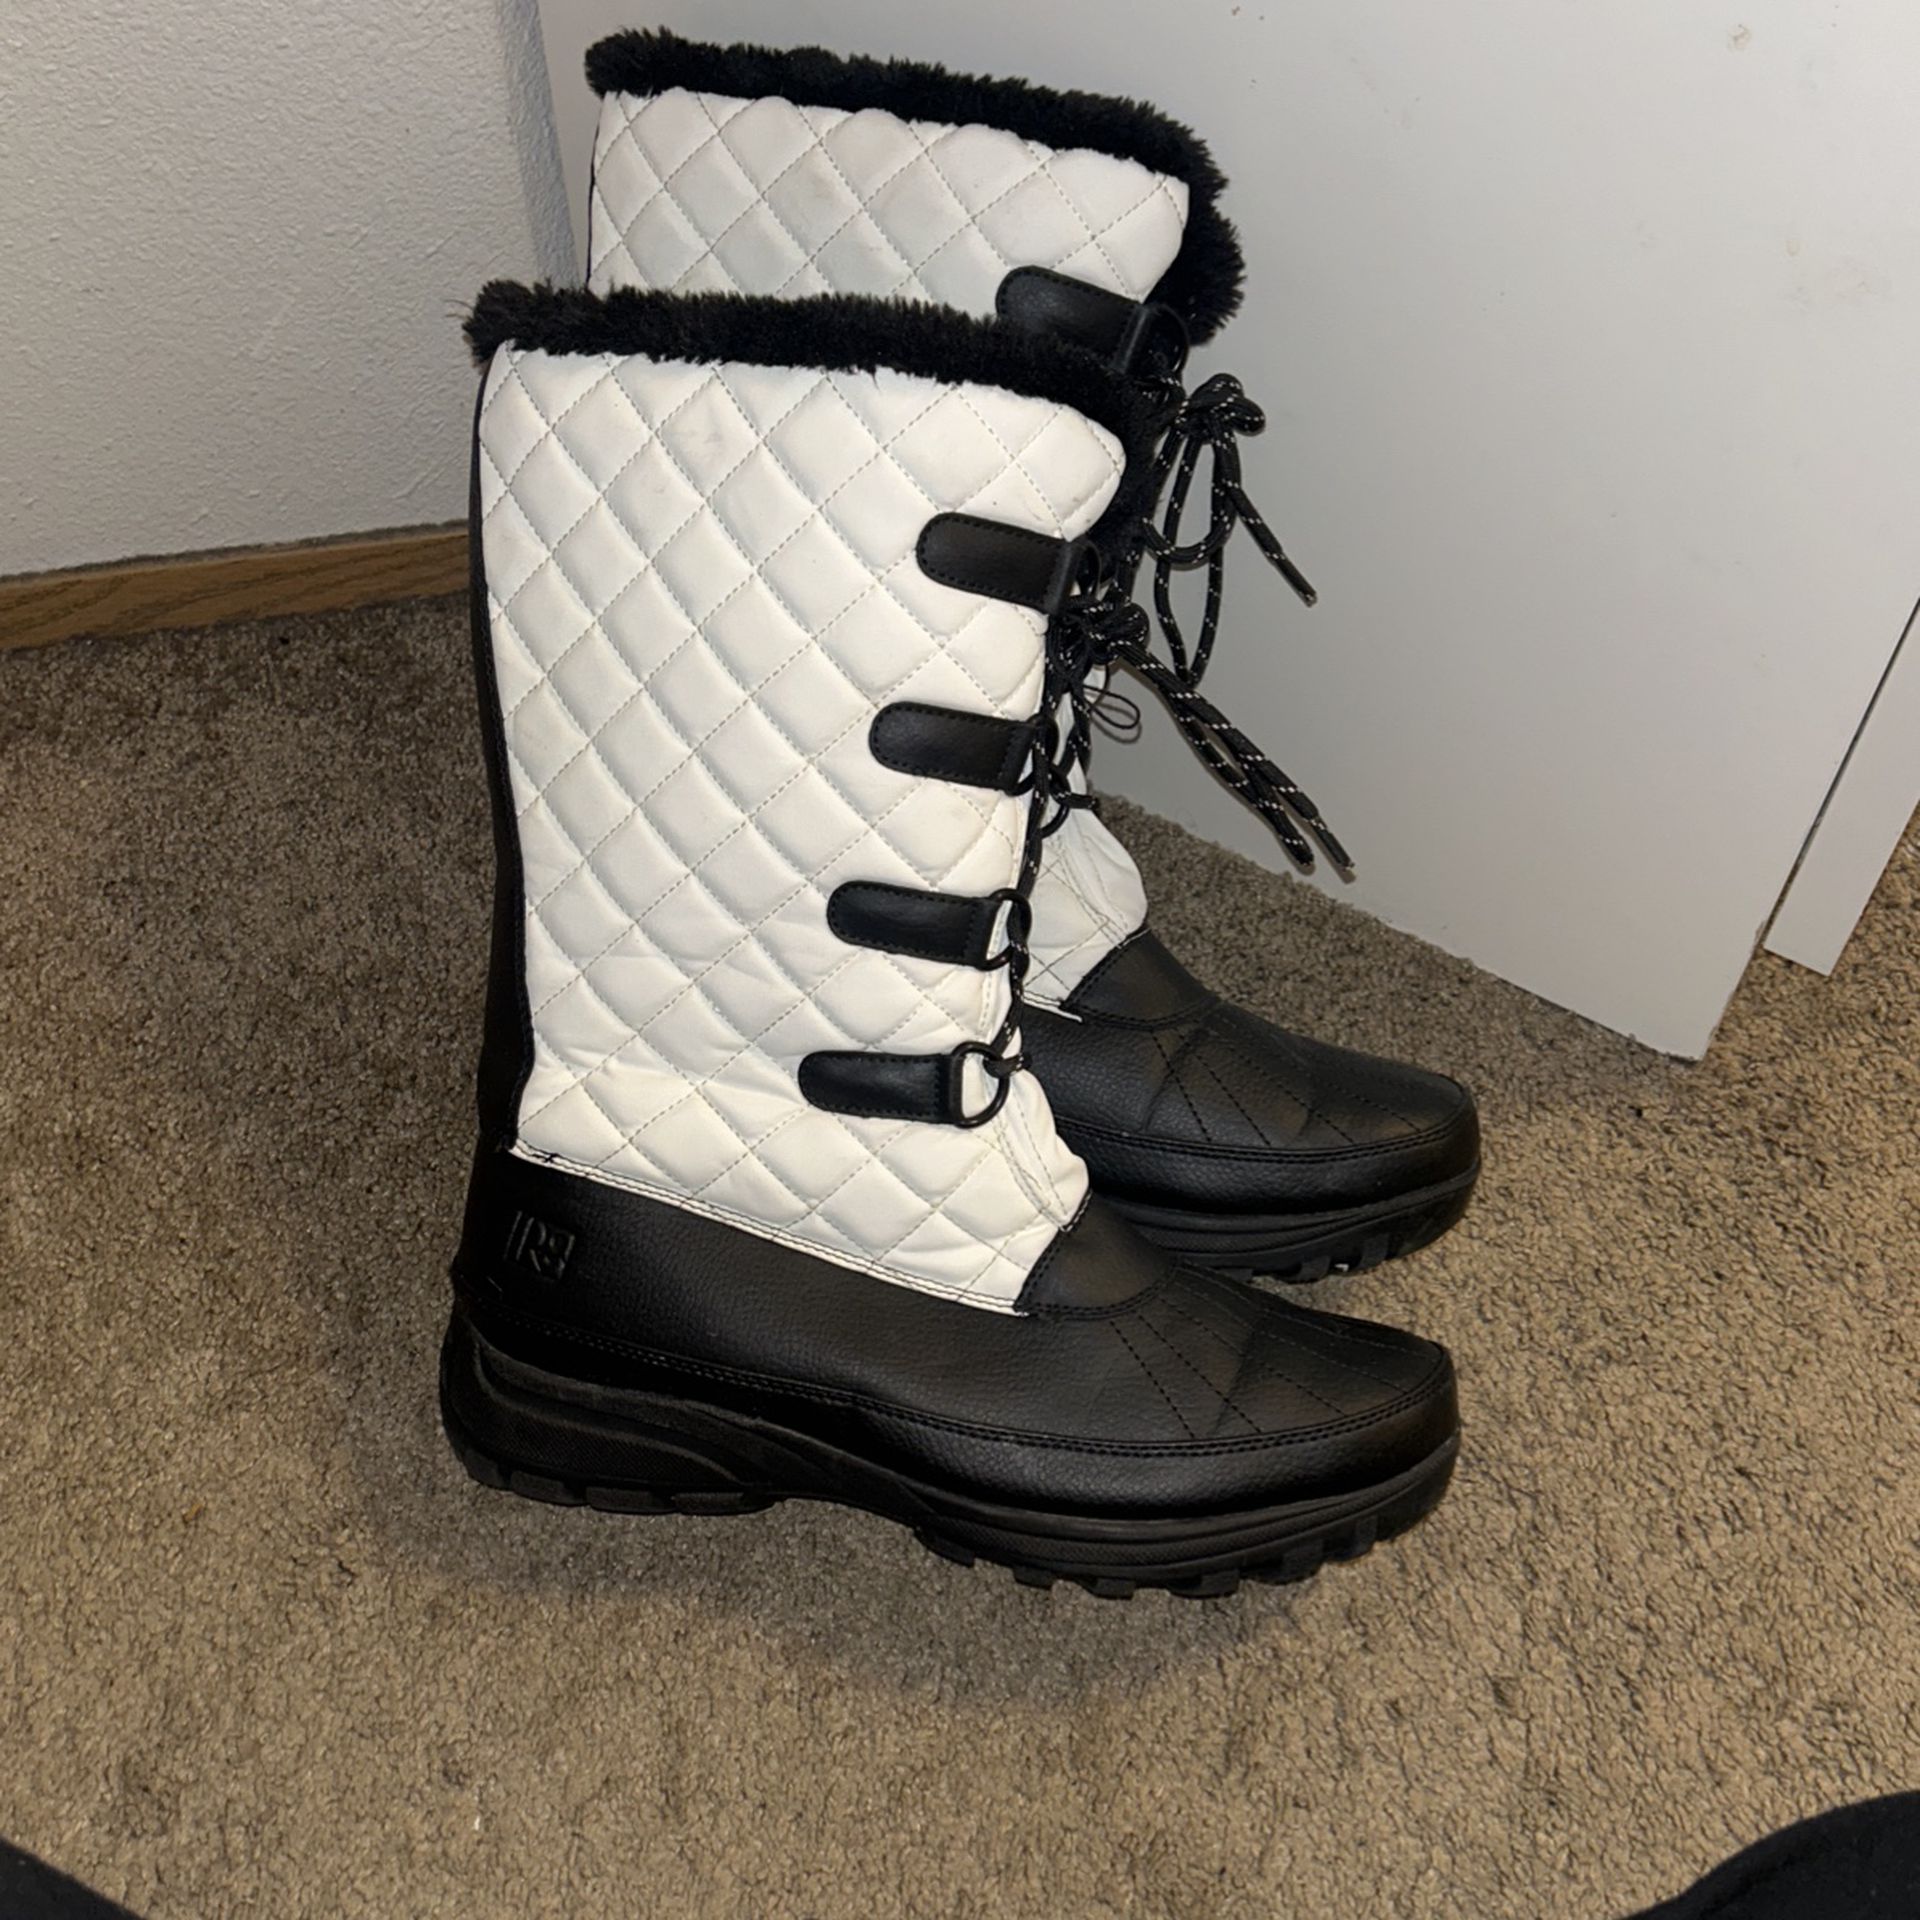 Snow Boots size 11 women